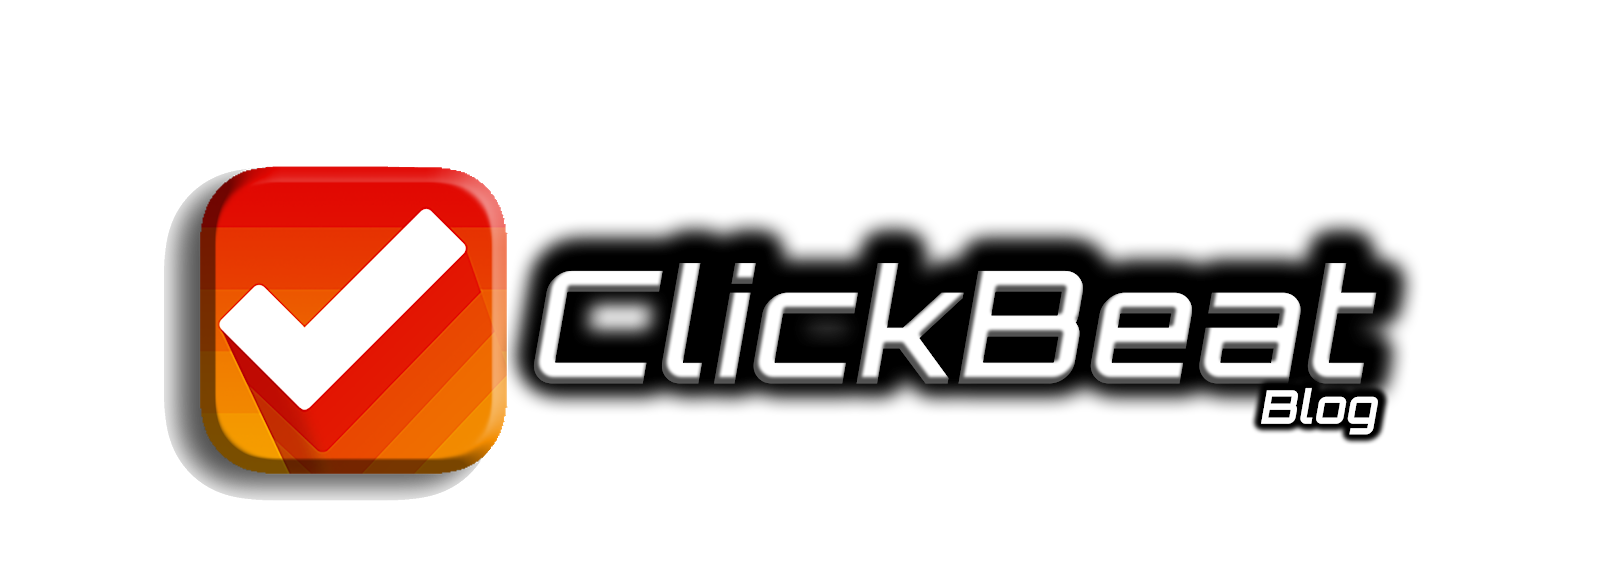 ClickBeat